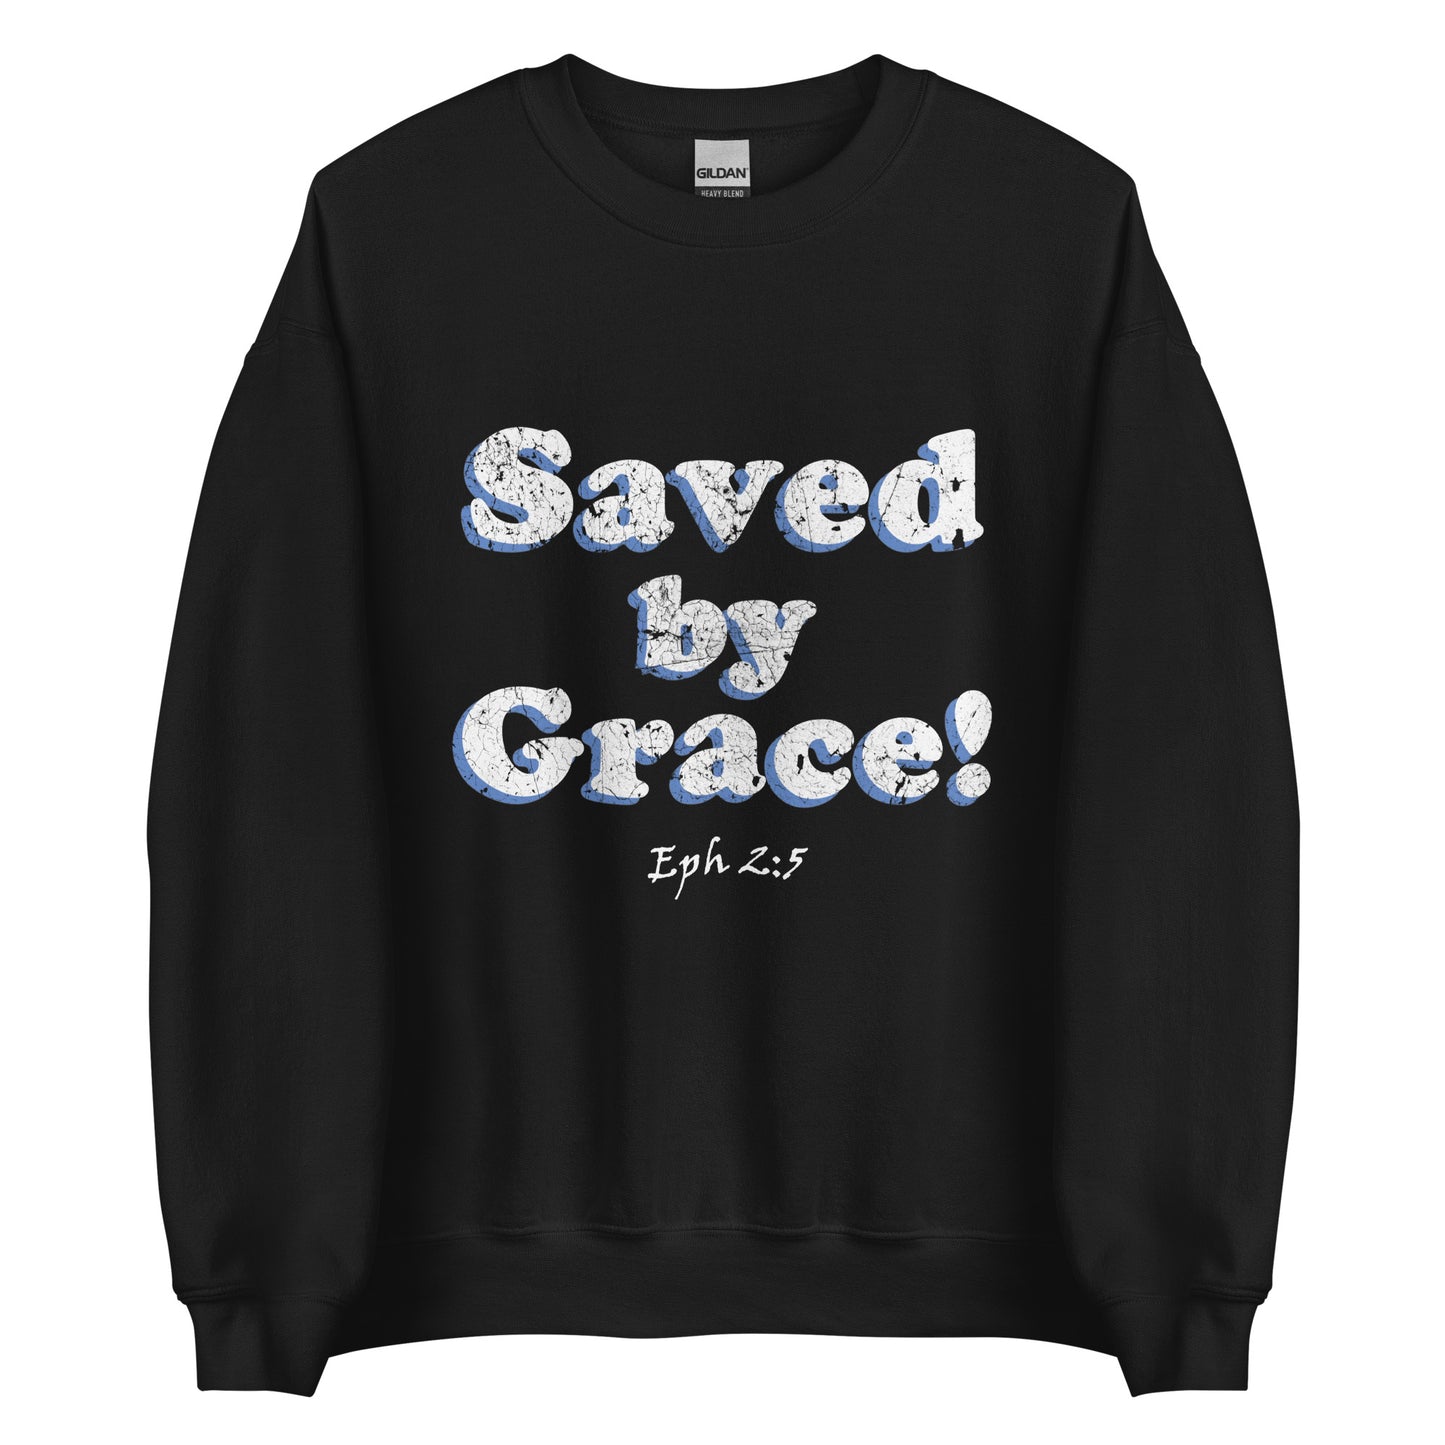 Saved by Grace! Unisex Sweatshirt - Solid Rock Designs | Christian Apparel